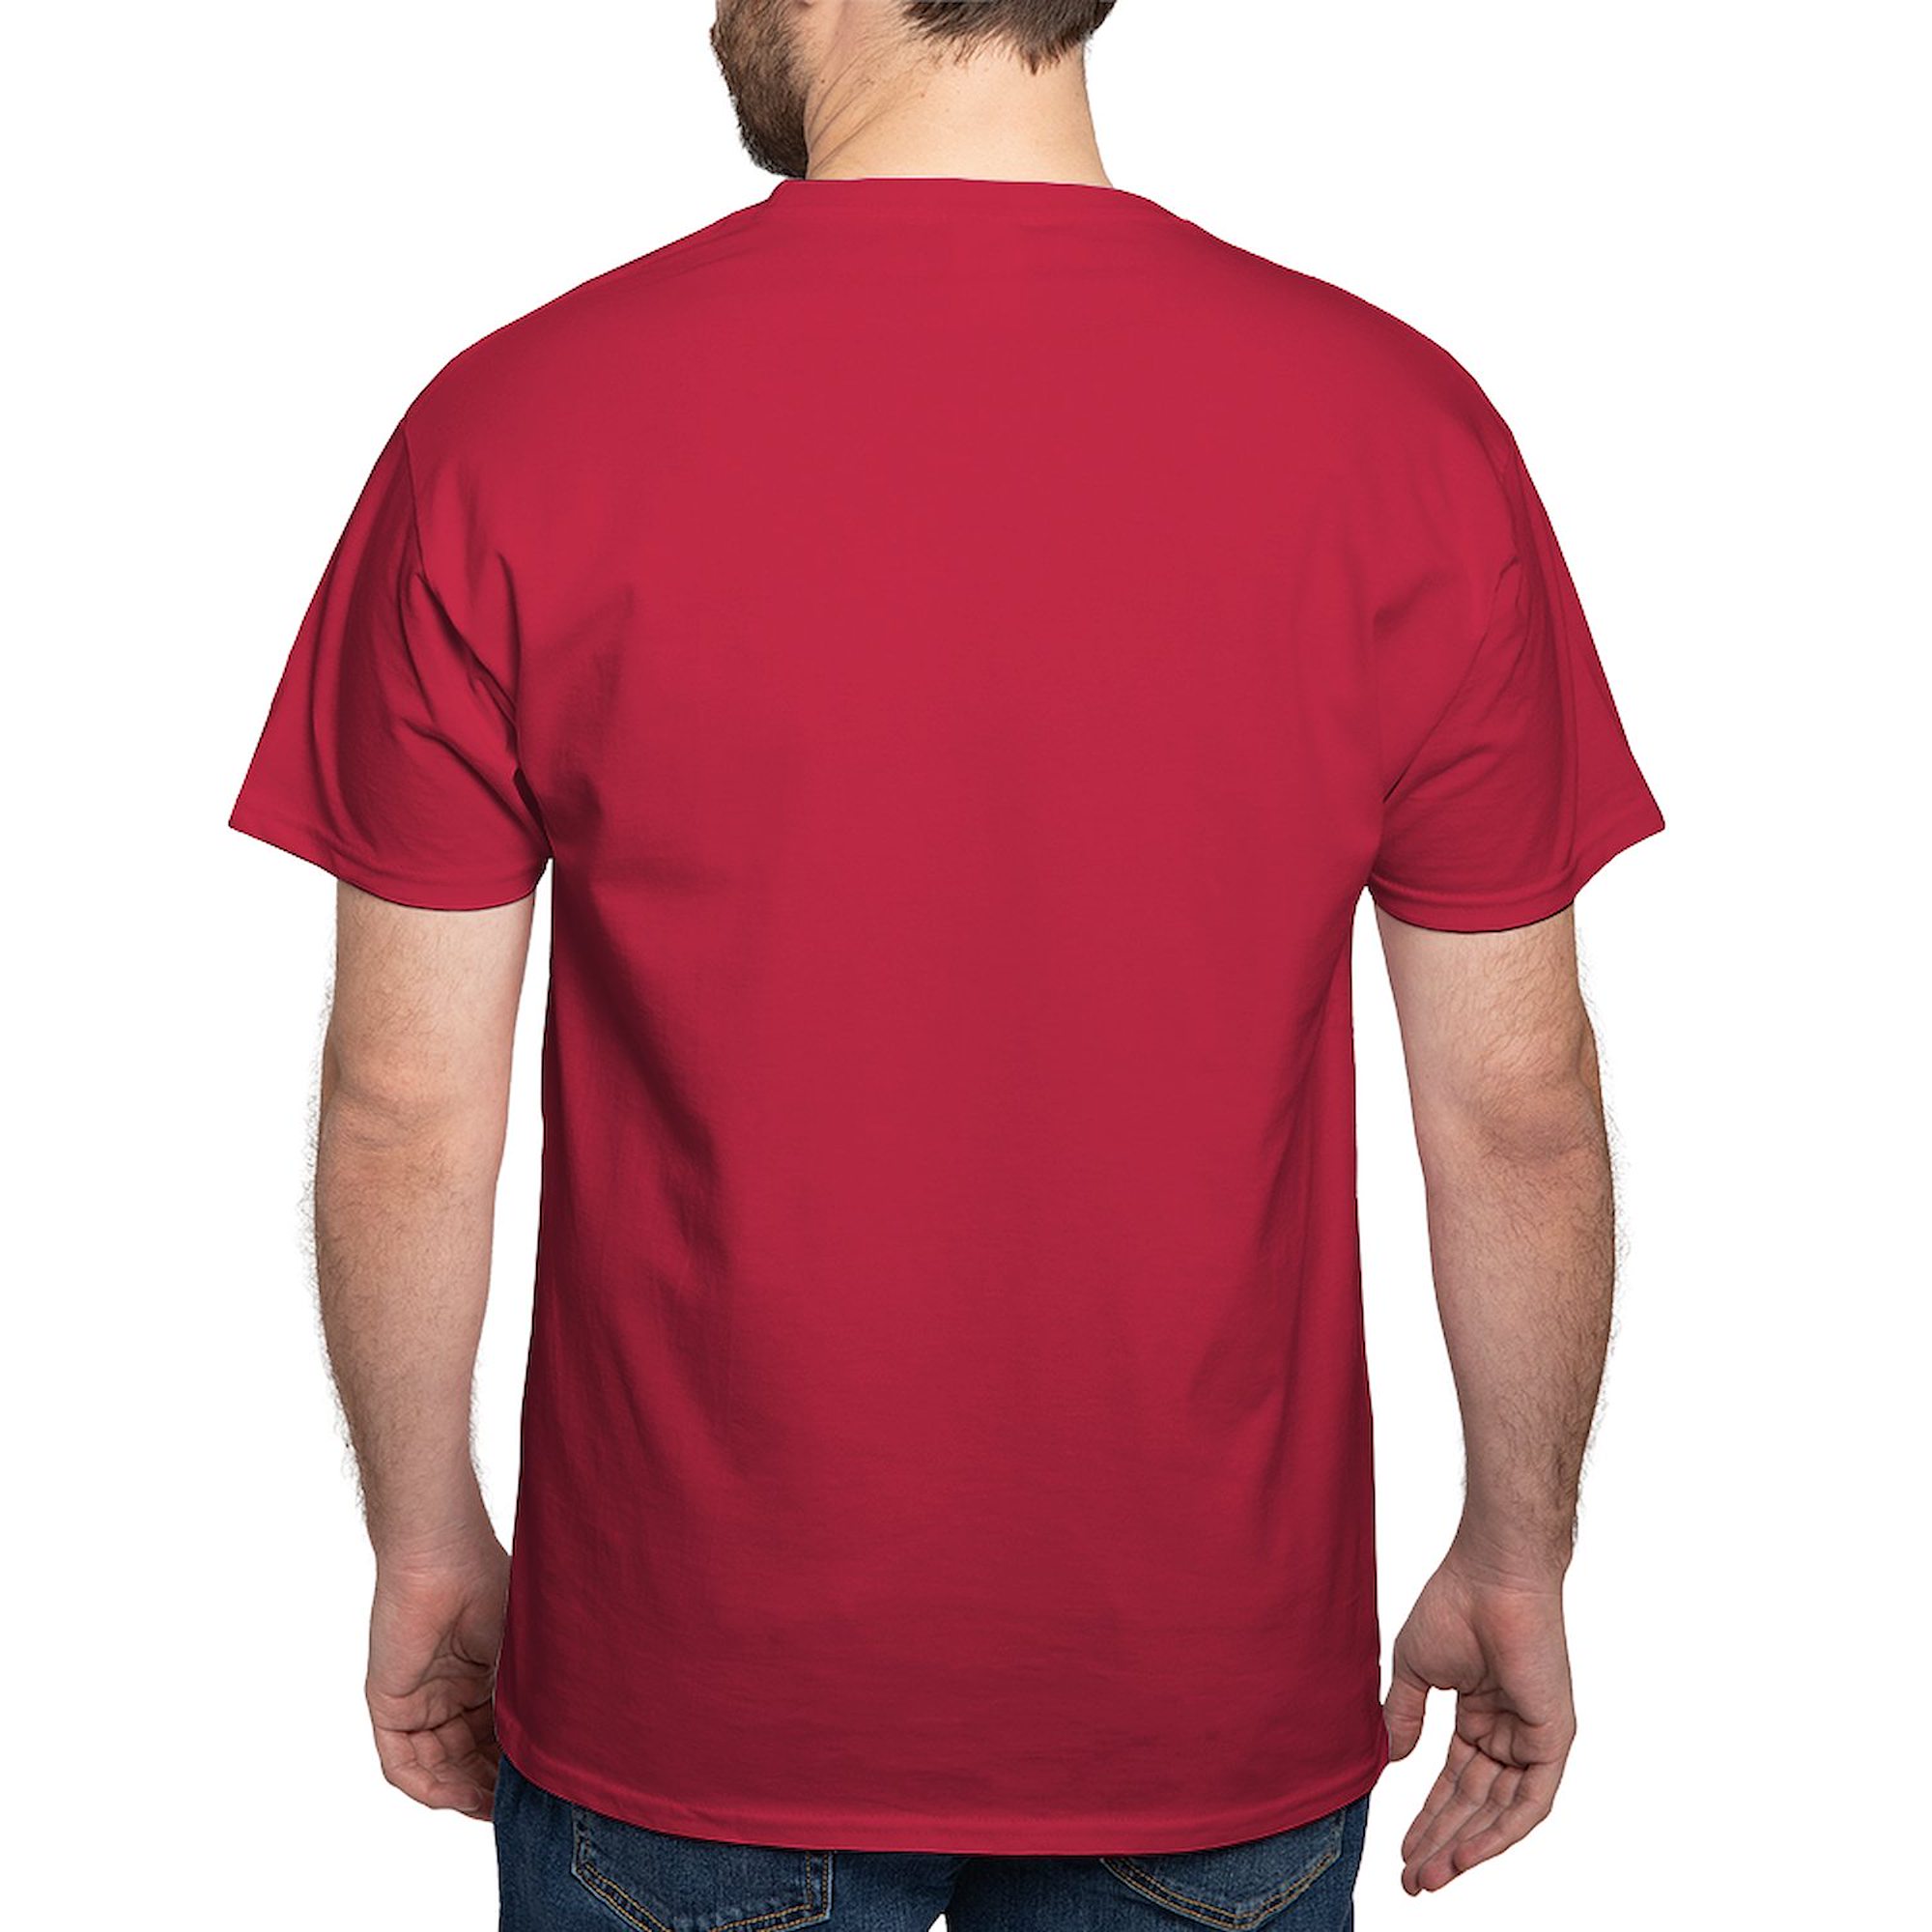 CafePress - Star Trek 'Job Description' Men's Red Shirt - 100% Cotton T-Shirt - image 2 of 4